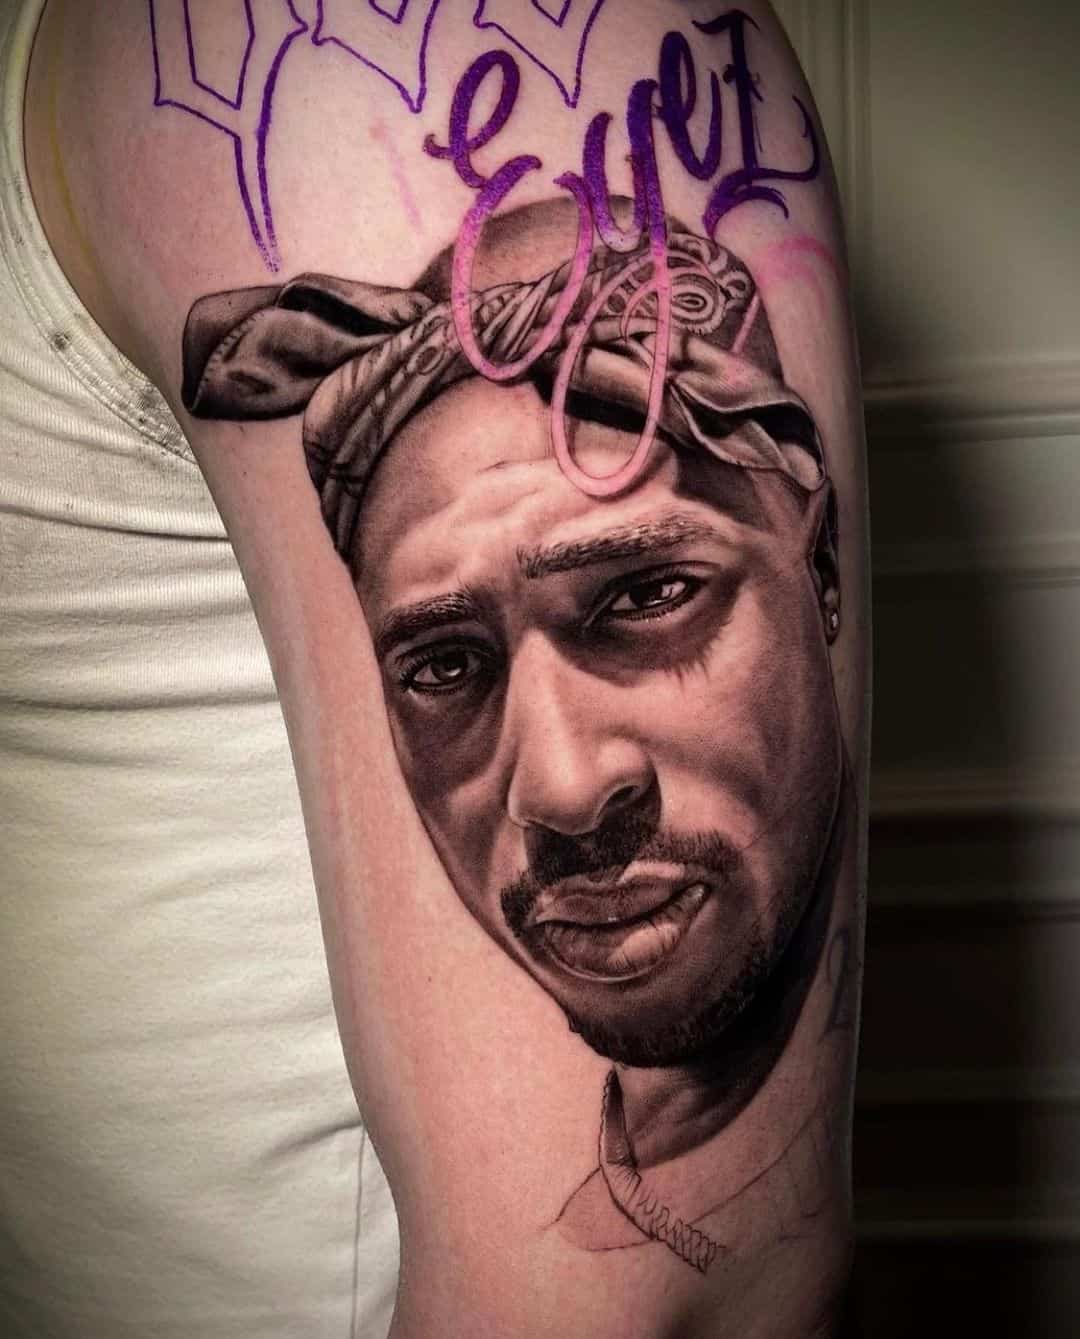 Amazing portrait tattoo by thygallerystudio